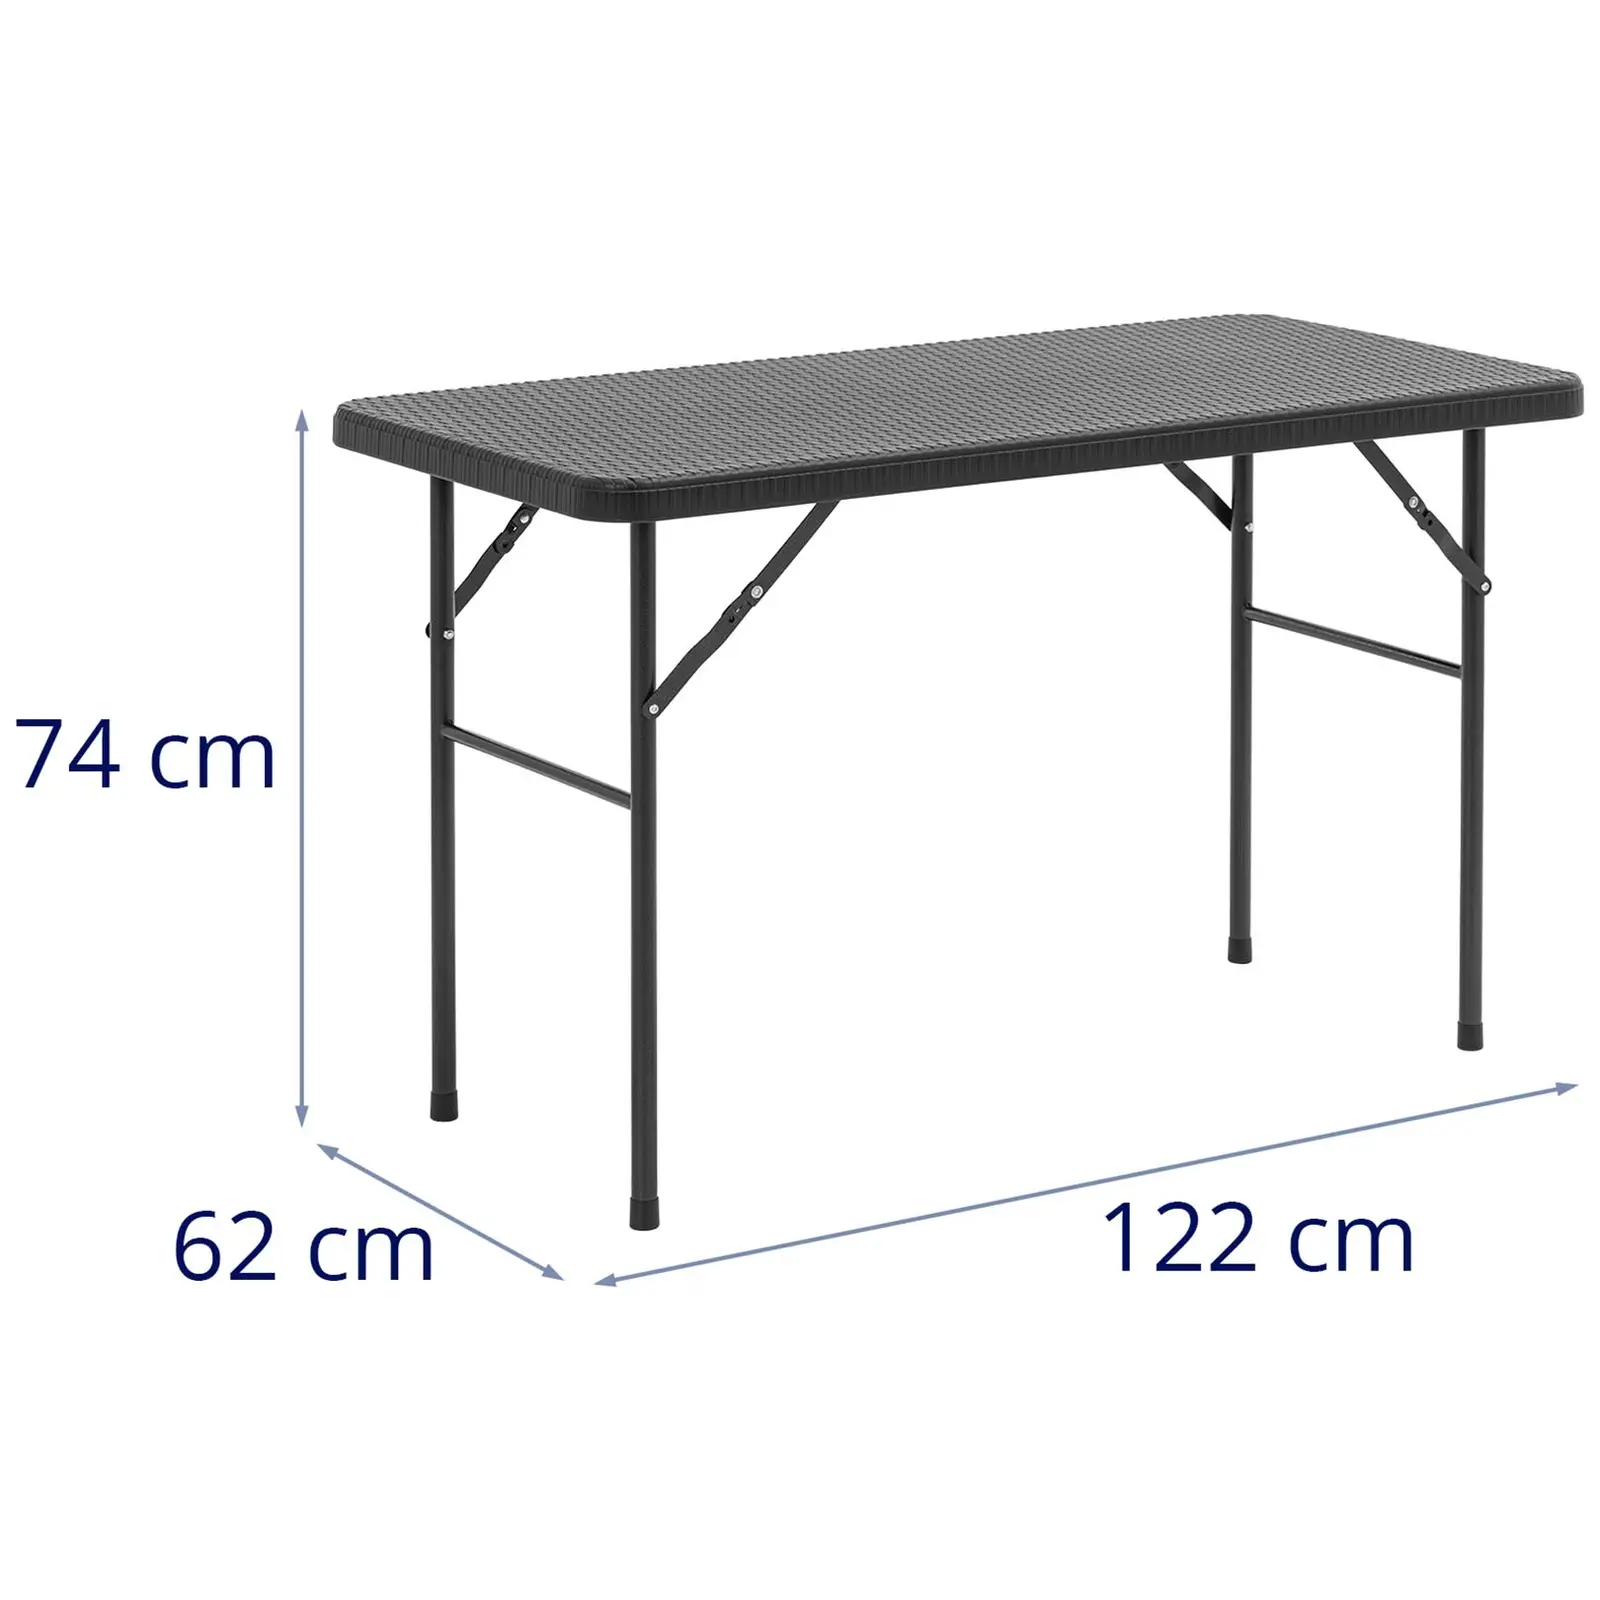 Hopfällbart bord - 121,60 x 61,50 x 73,50 cm - Inomhus / utomhus - Svart